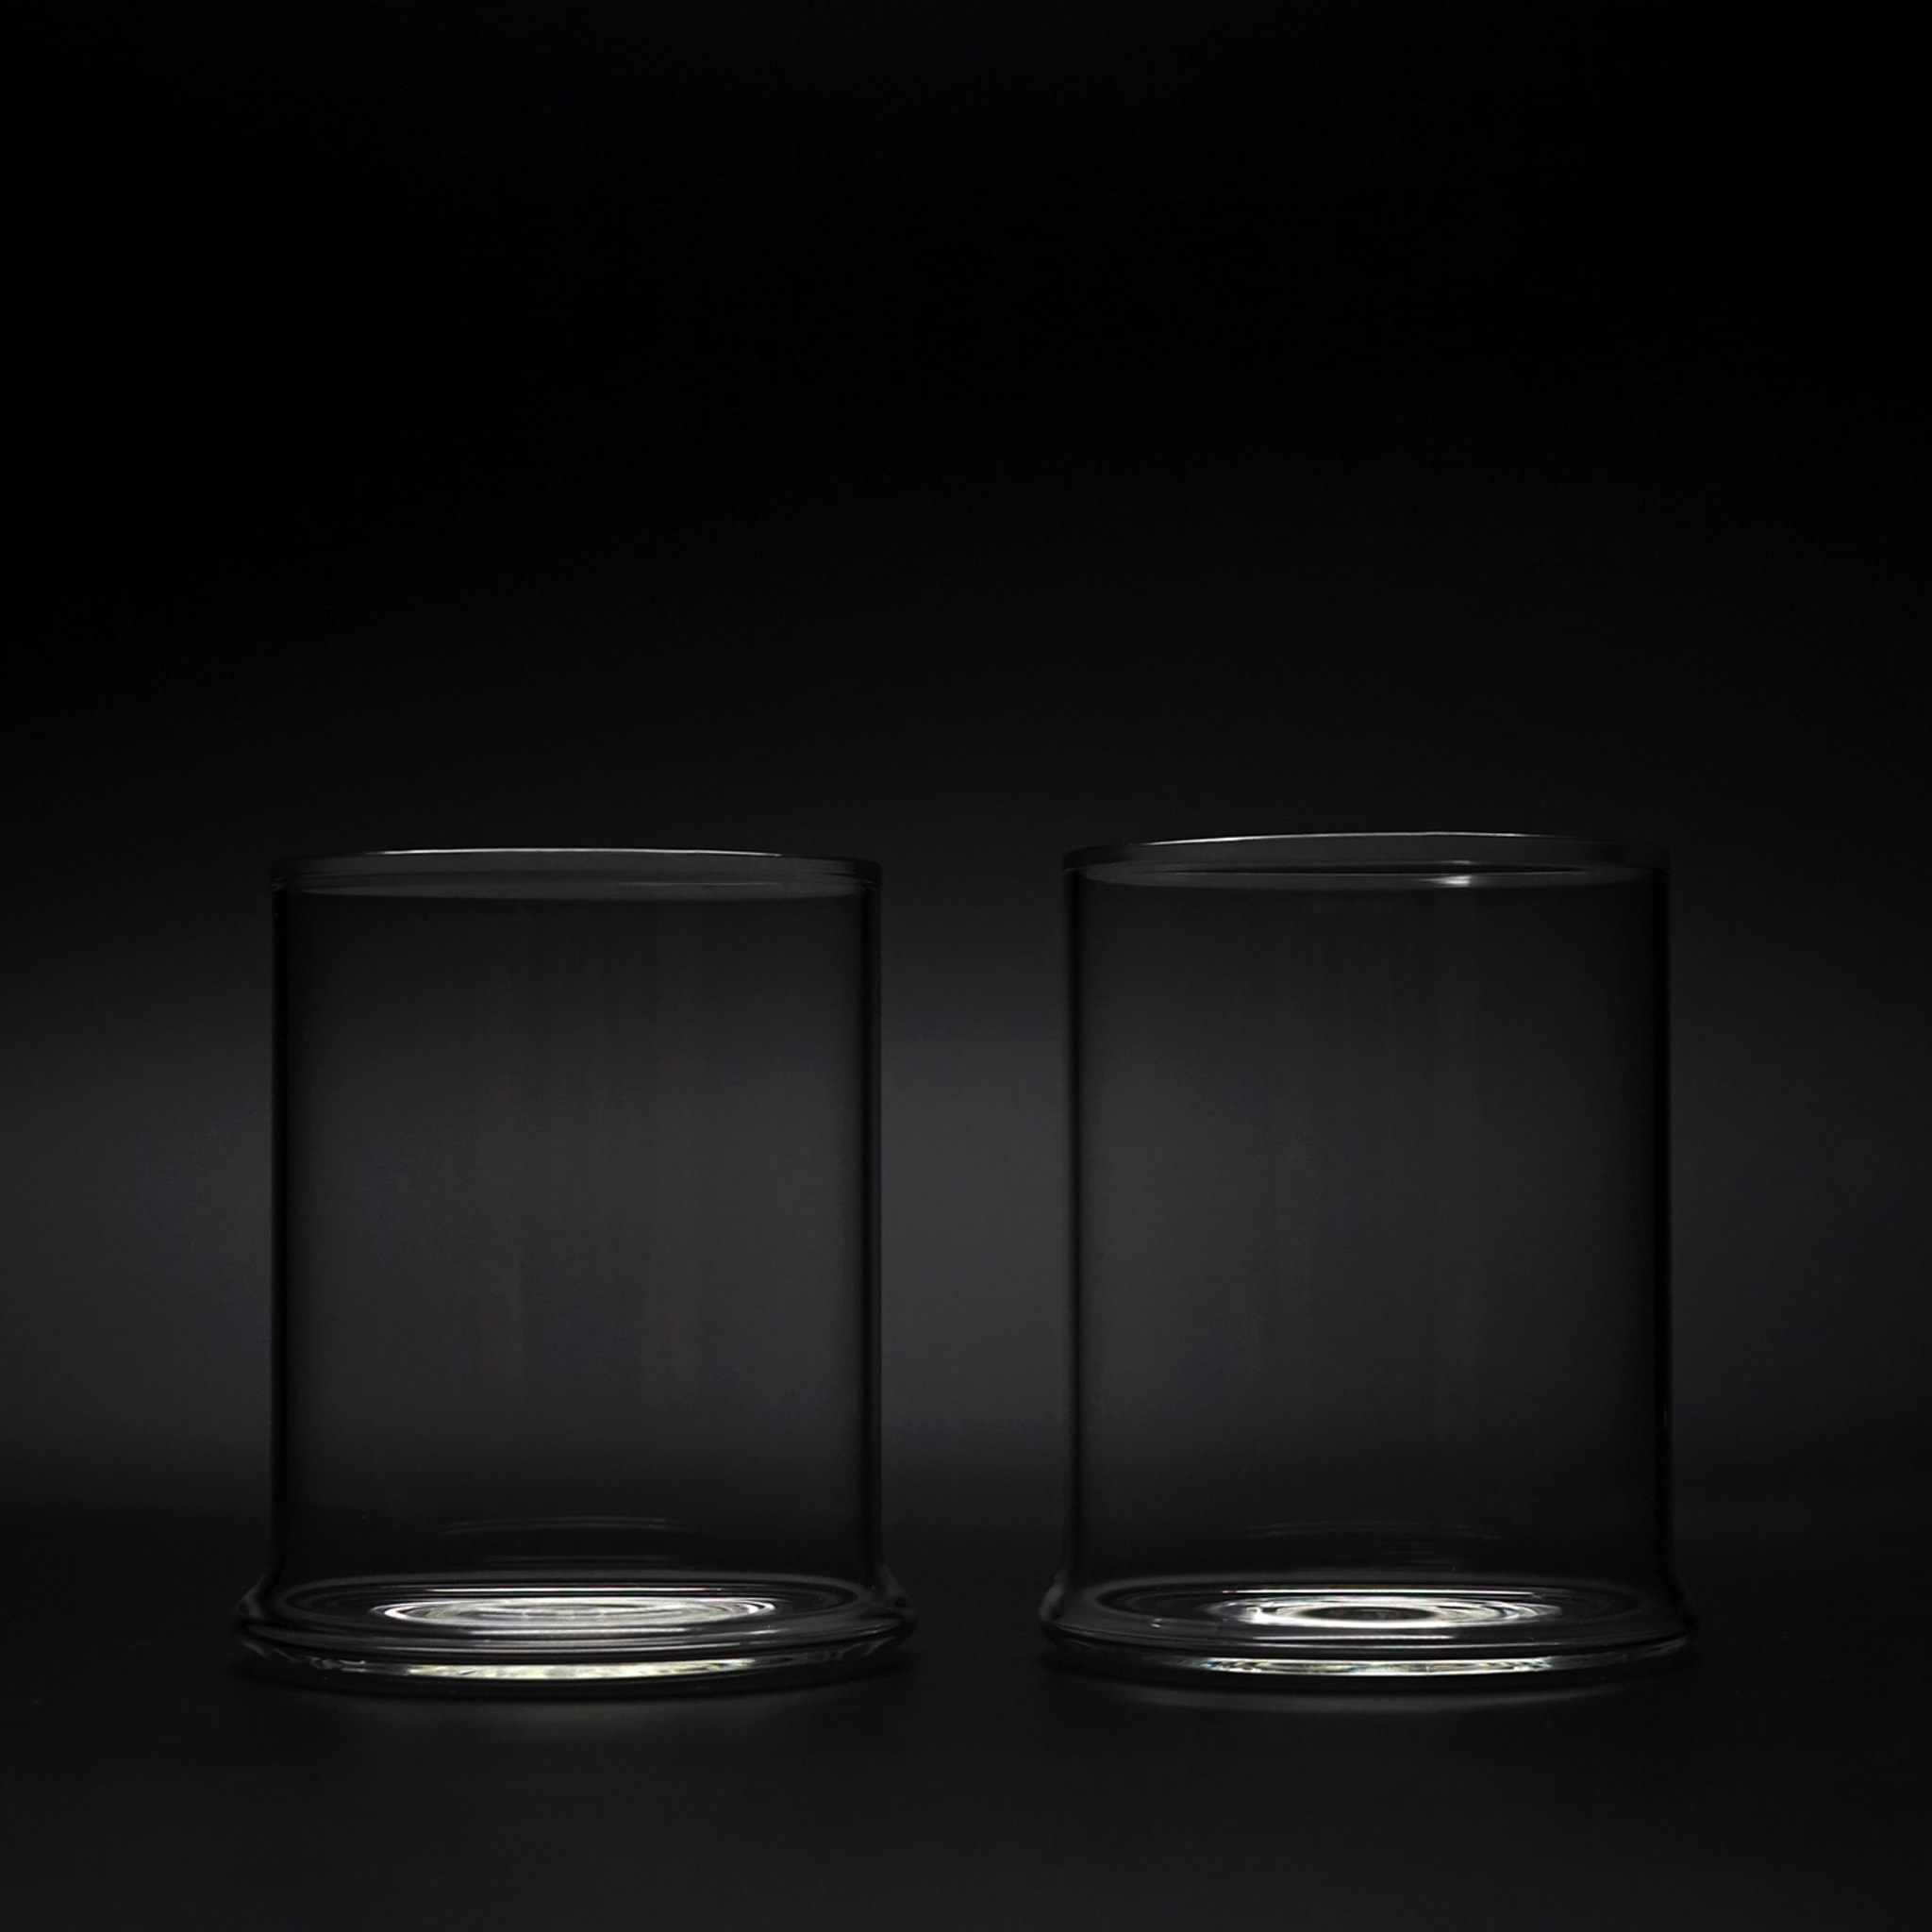 Take Set of 2 Water Glasses - Alternative view 2